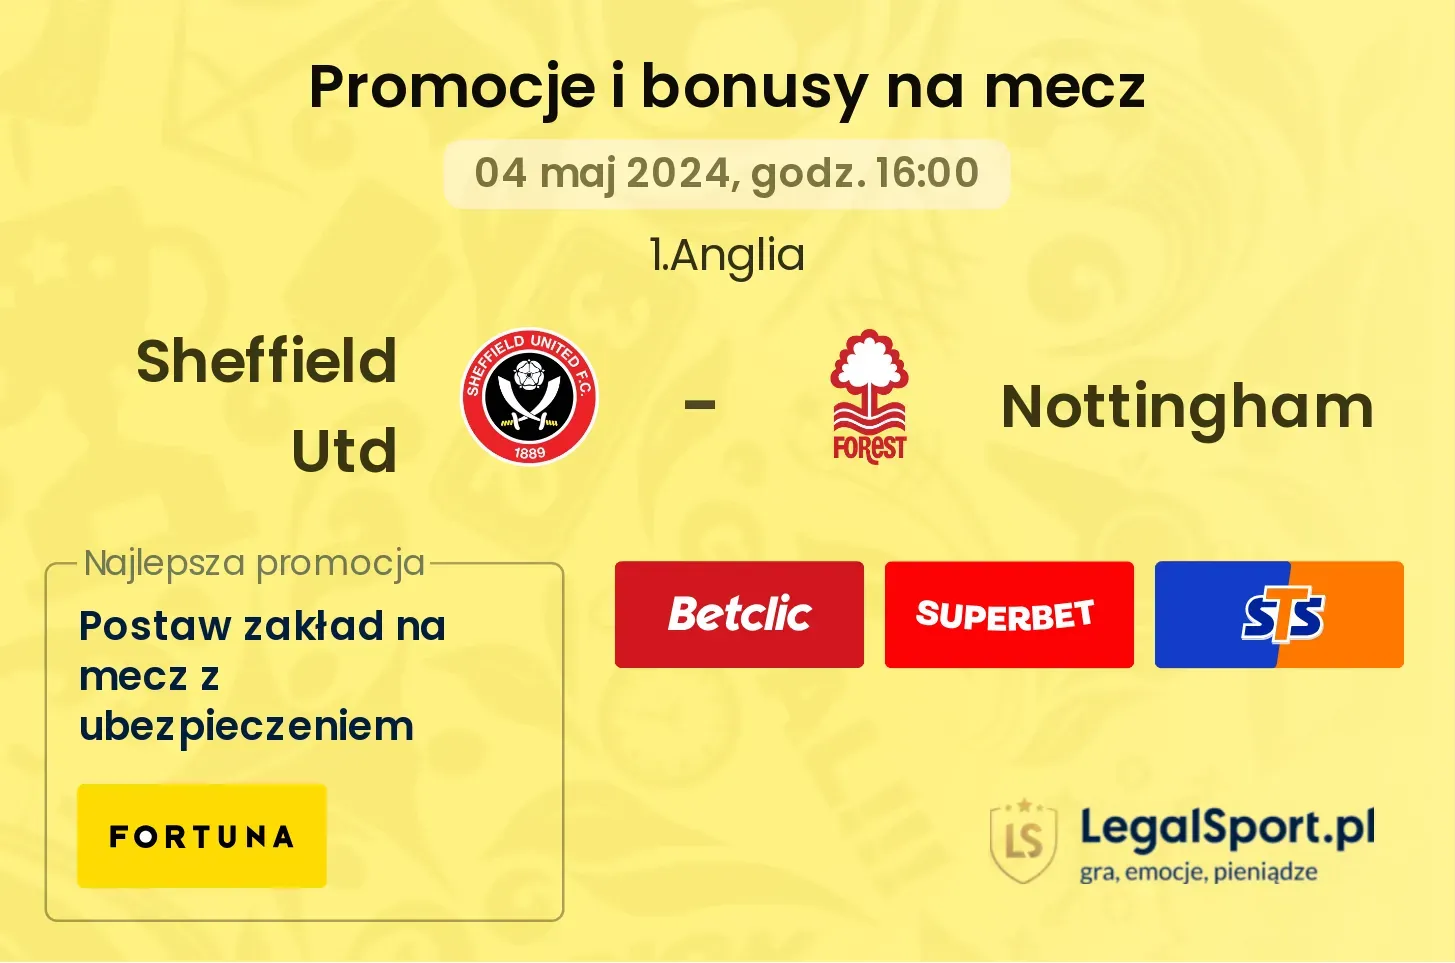 Sheffield Utd - Nottingham promocje bonusy na mecz